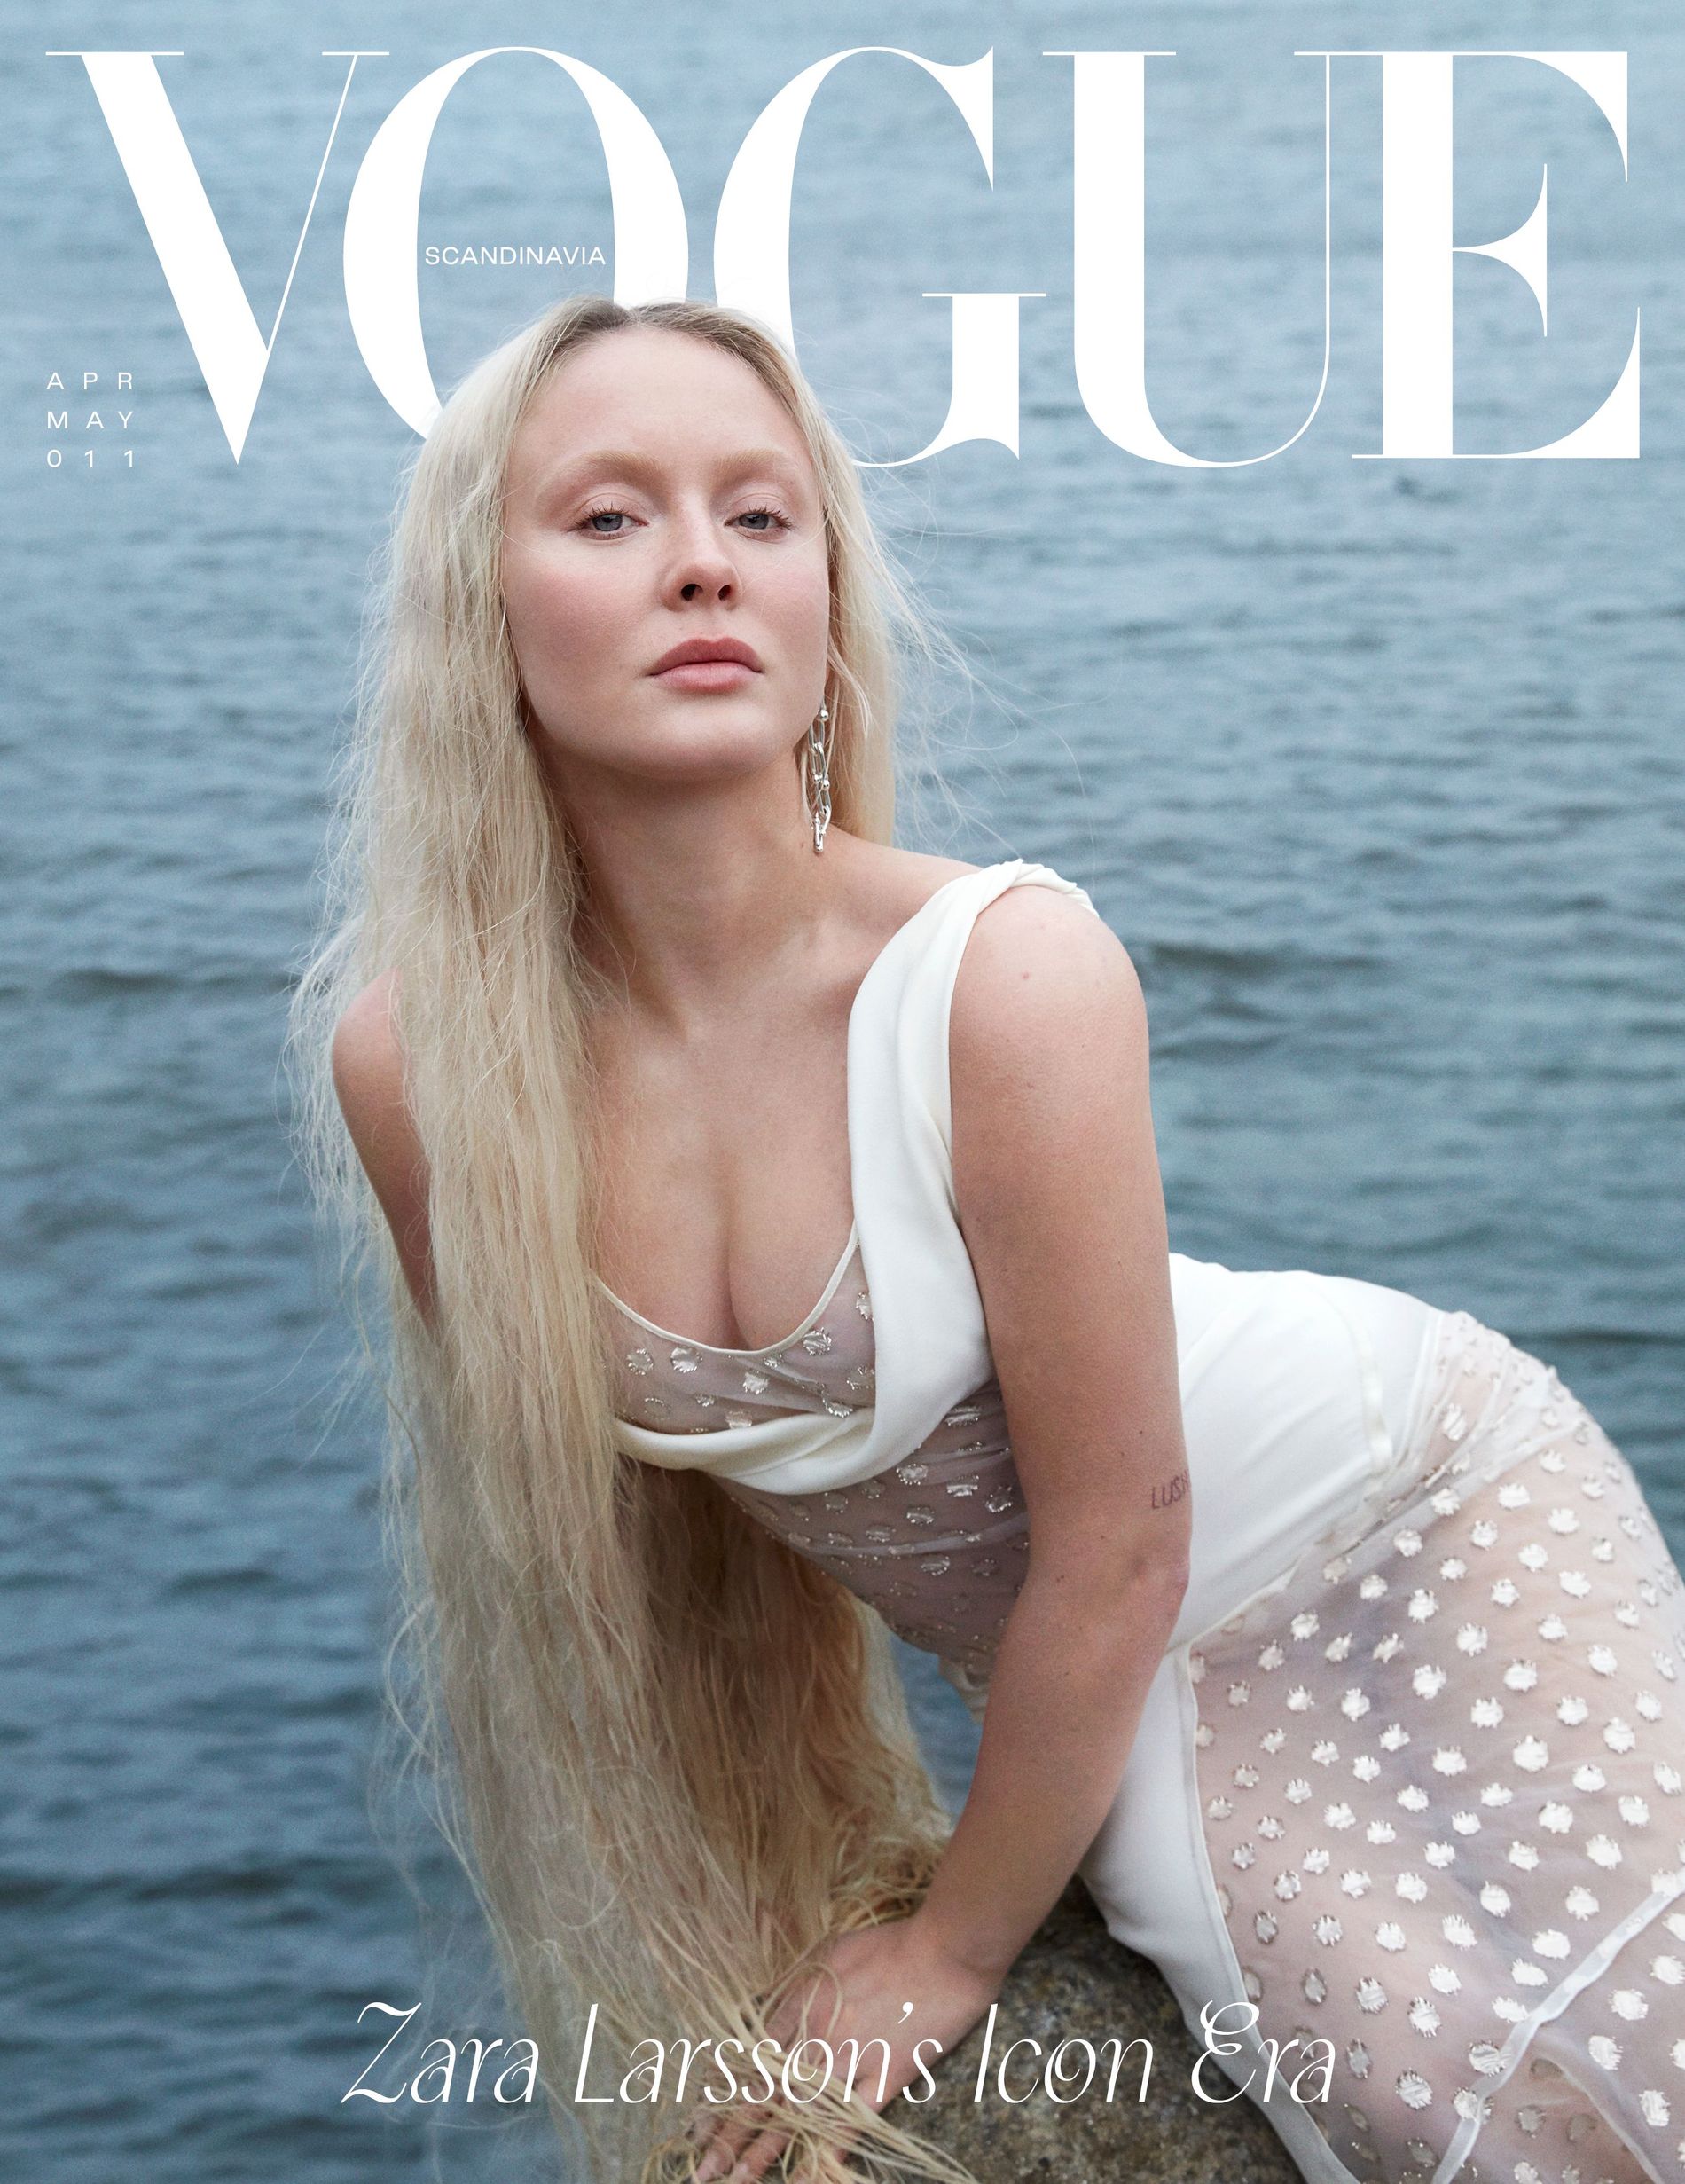 Go 'future bowling' with cover star Zara Larsson - Vogue Scandinavia